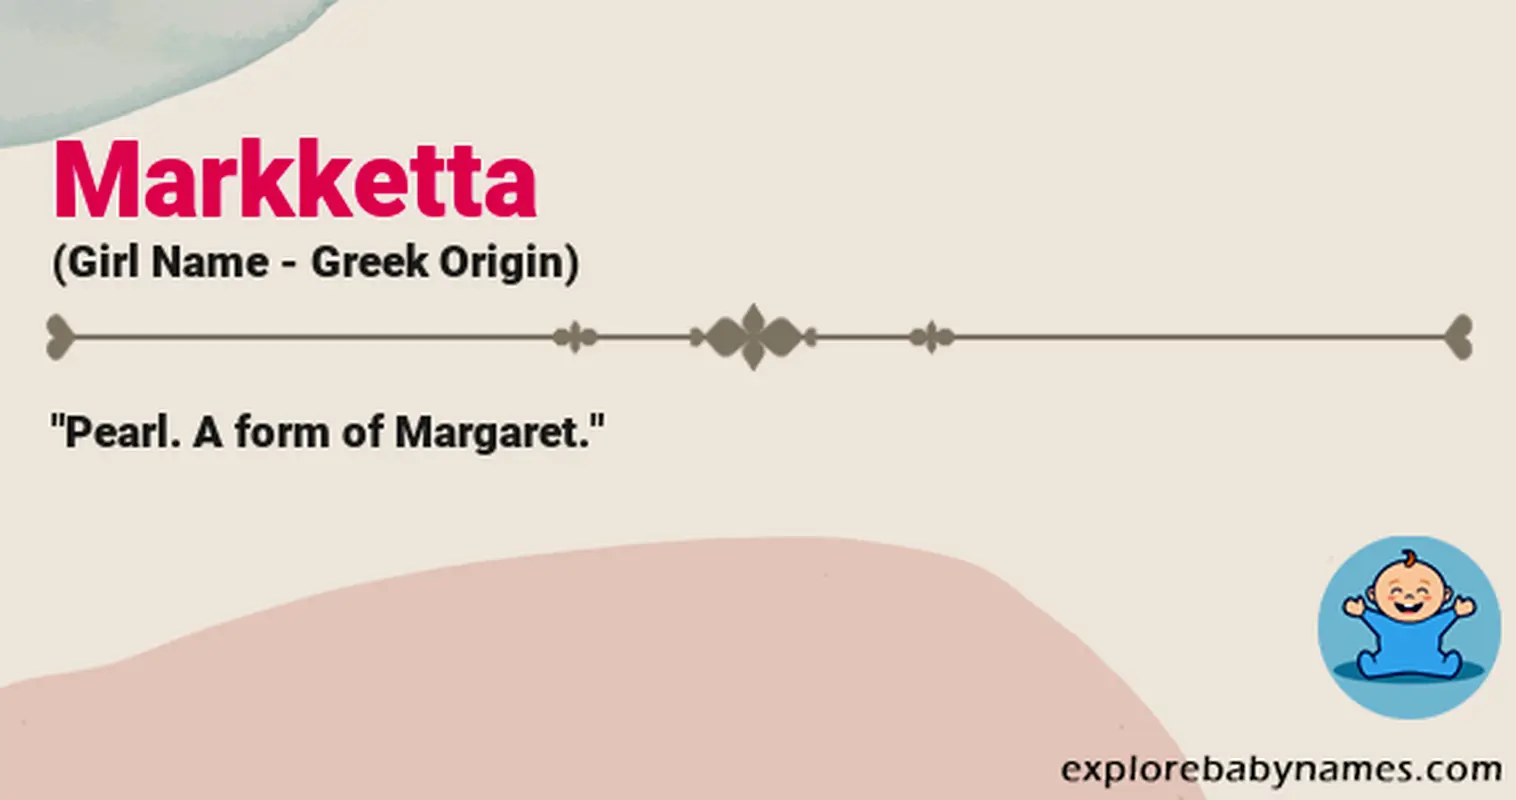 Meaning of Markketta